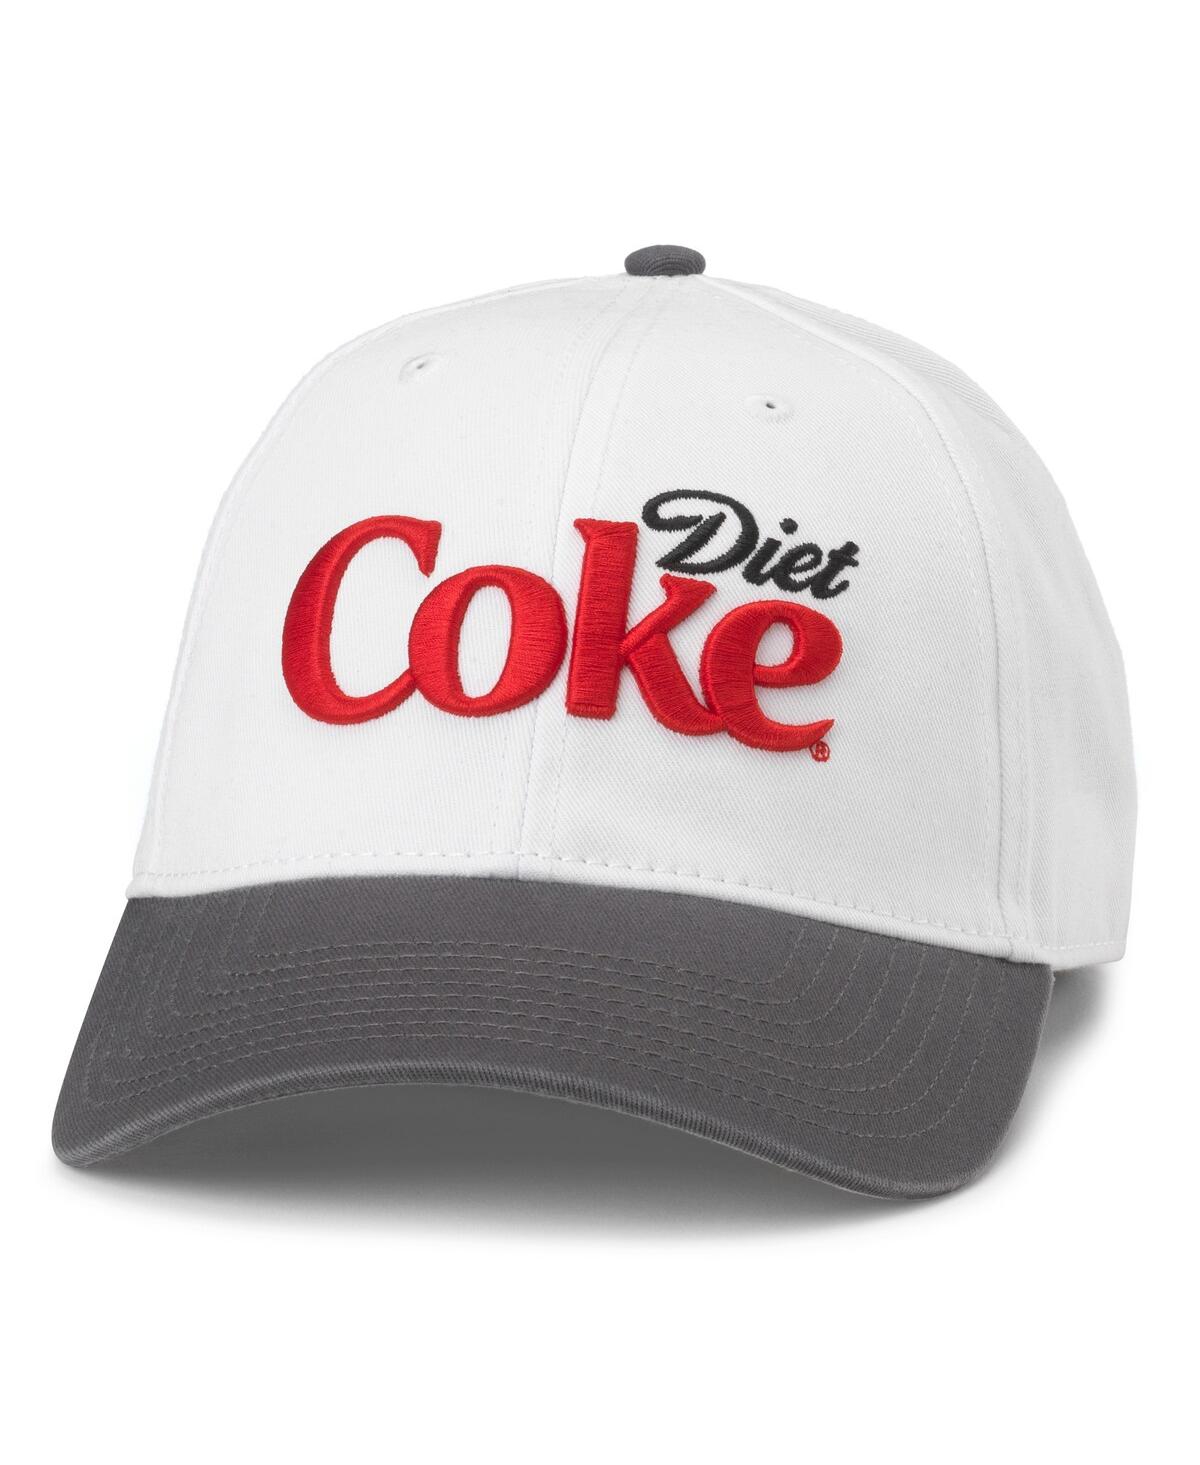 American Needle Men's And Women's  White, Charcoal Diet Coke Ballpark Adjustable Hat